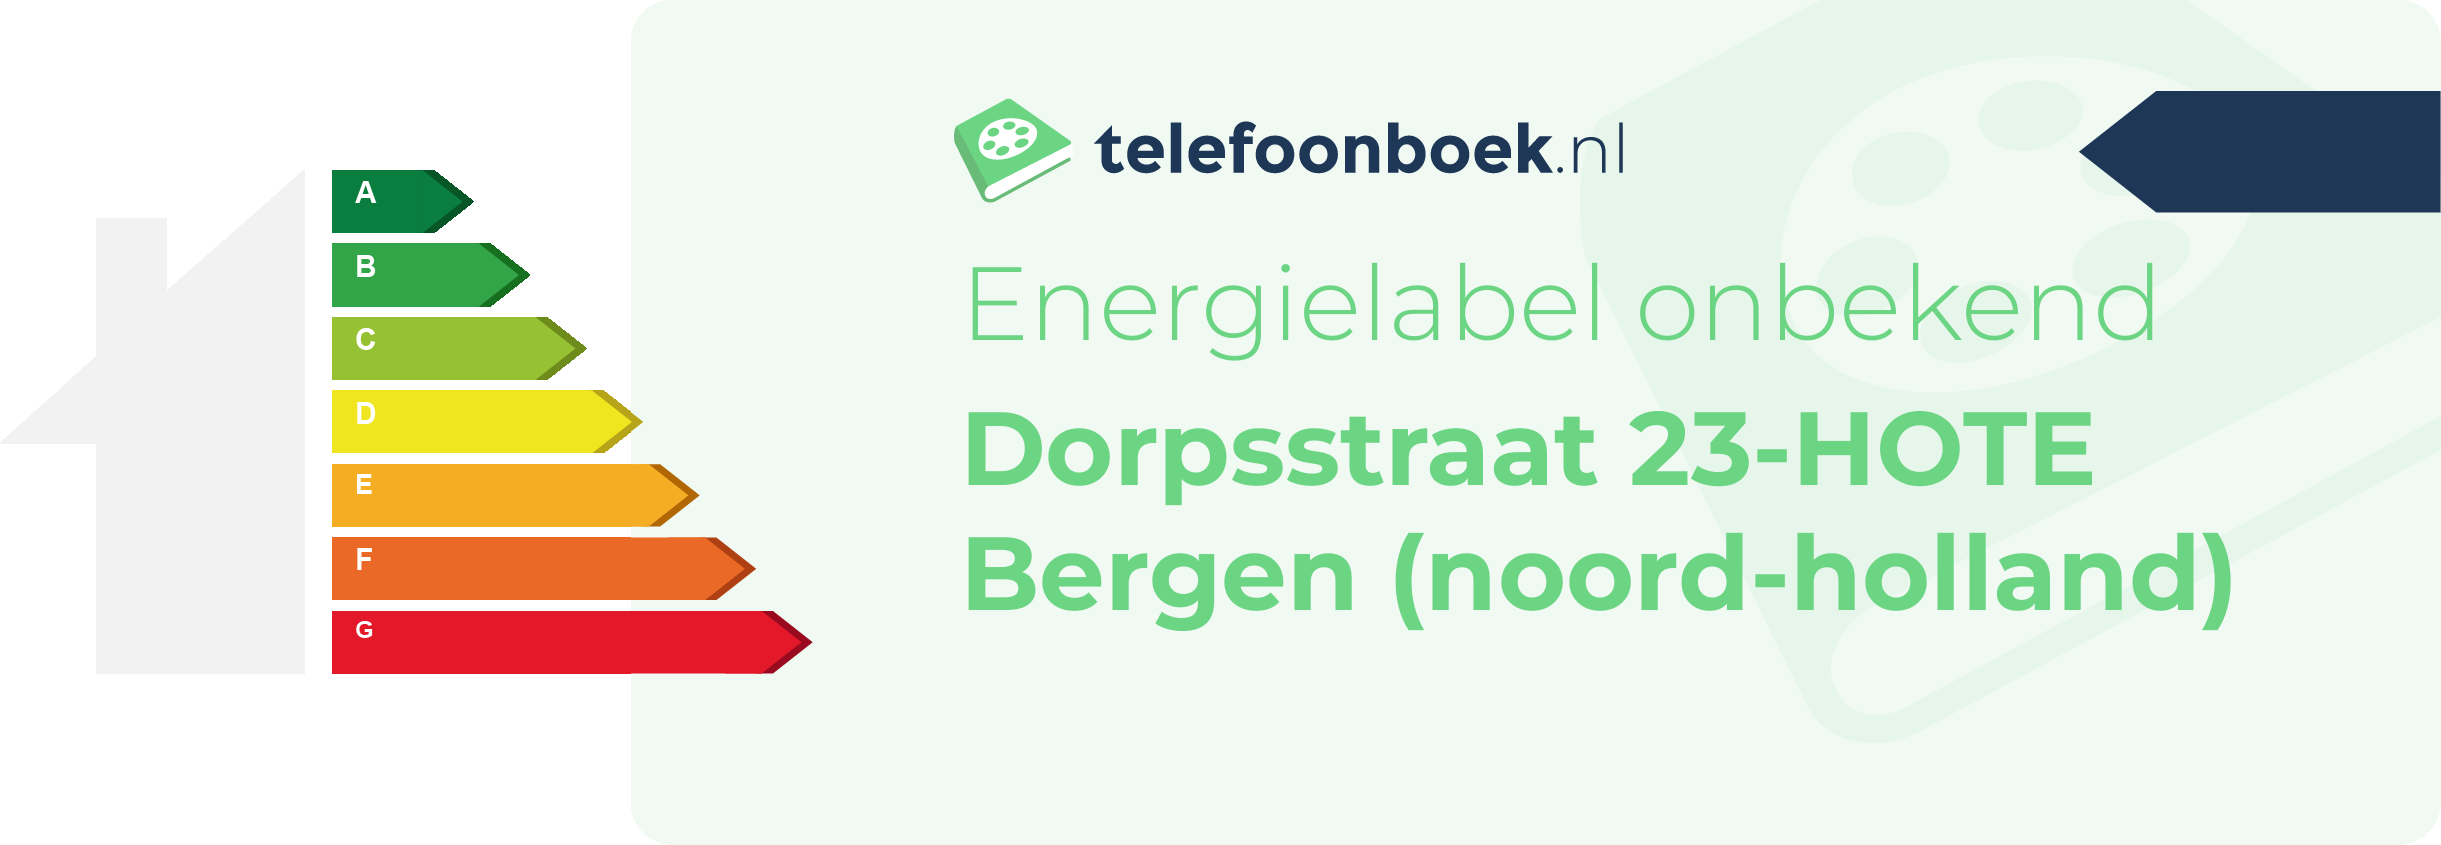 Energielabel Dorpsstraat 23-HOTE Bergen (Noord-Holland)